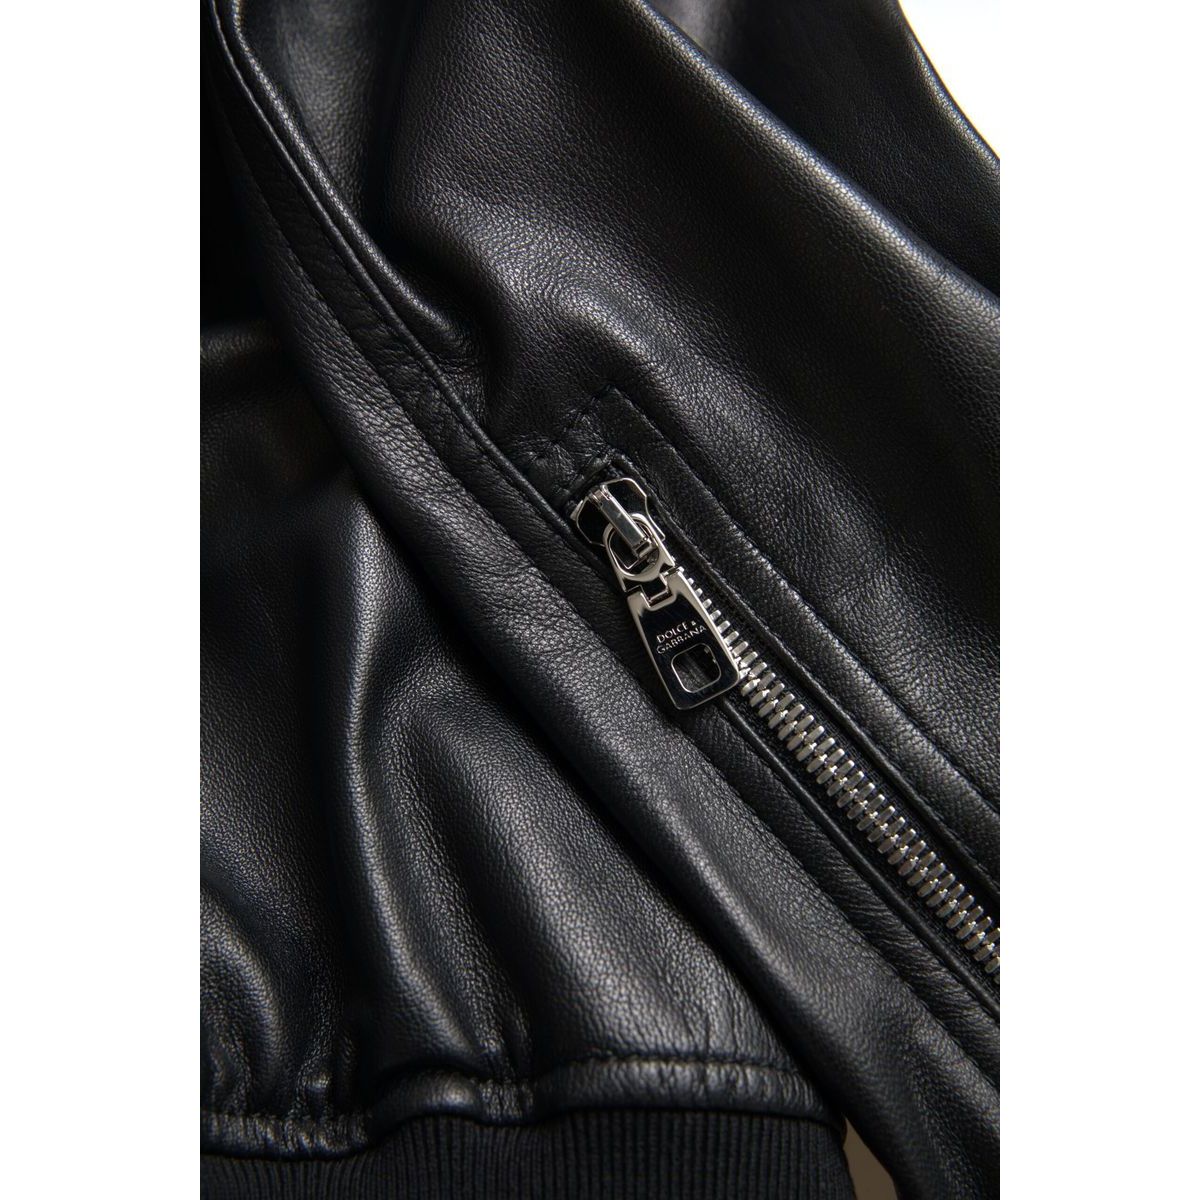 Dolce & Gabbana Elegant Black Leather Bomber Jacket black-leather-full-zip-bomber-men-jacket